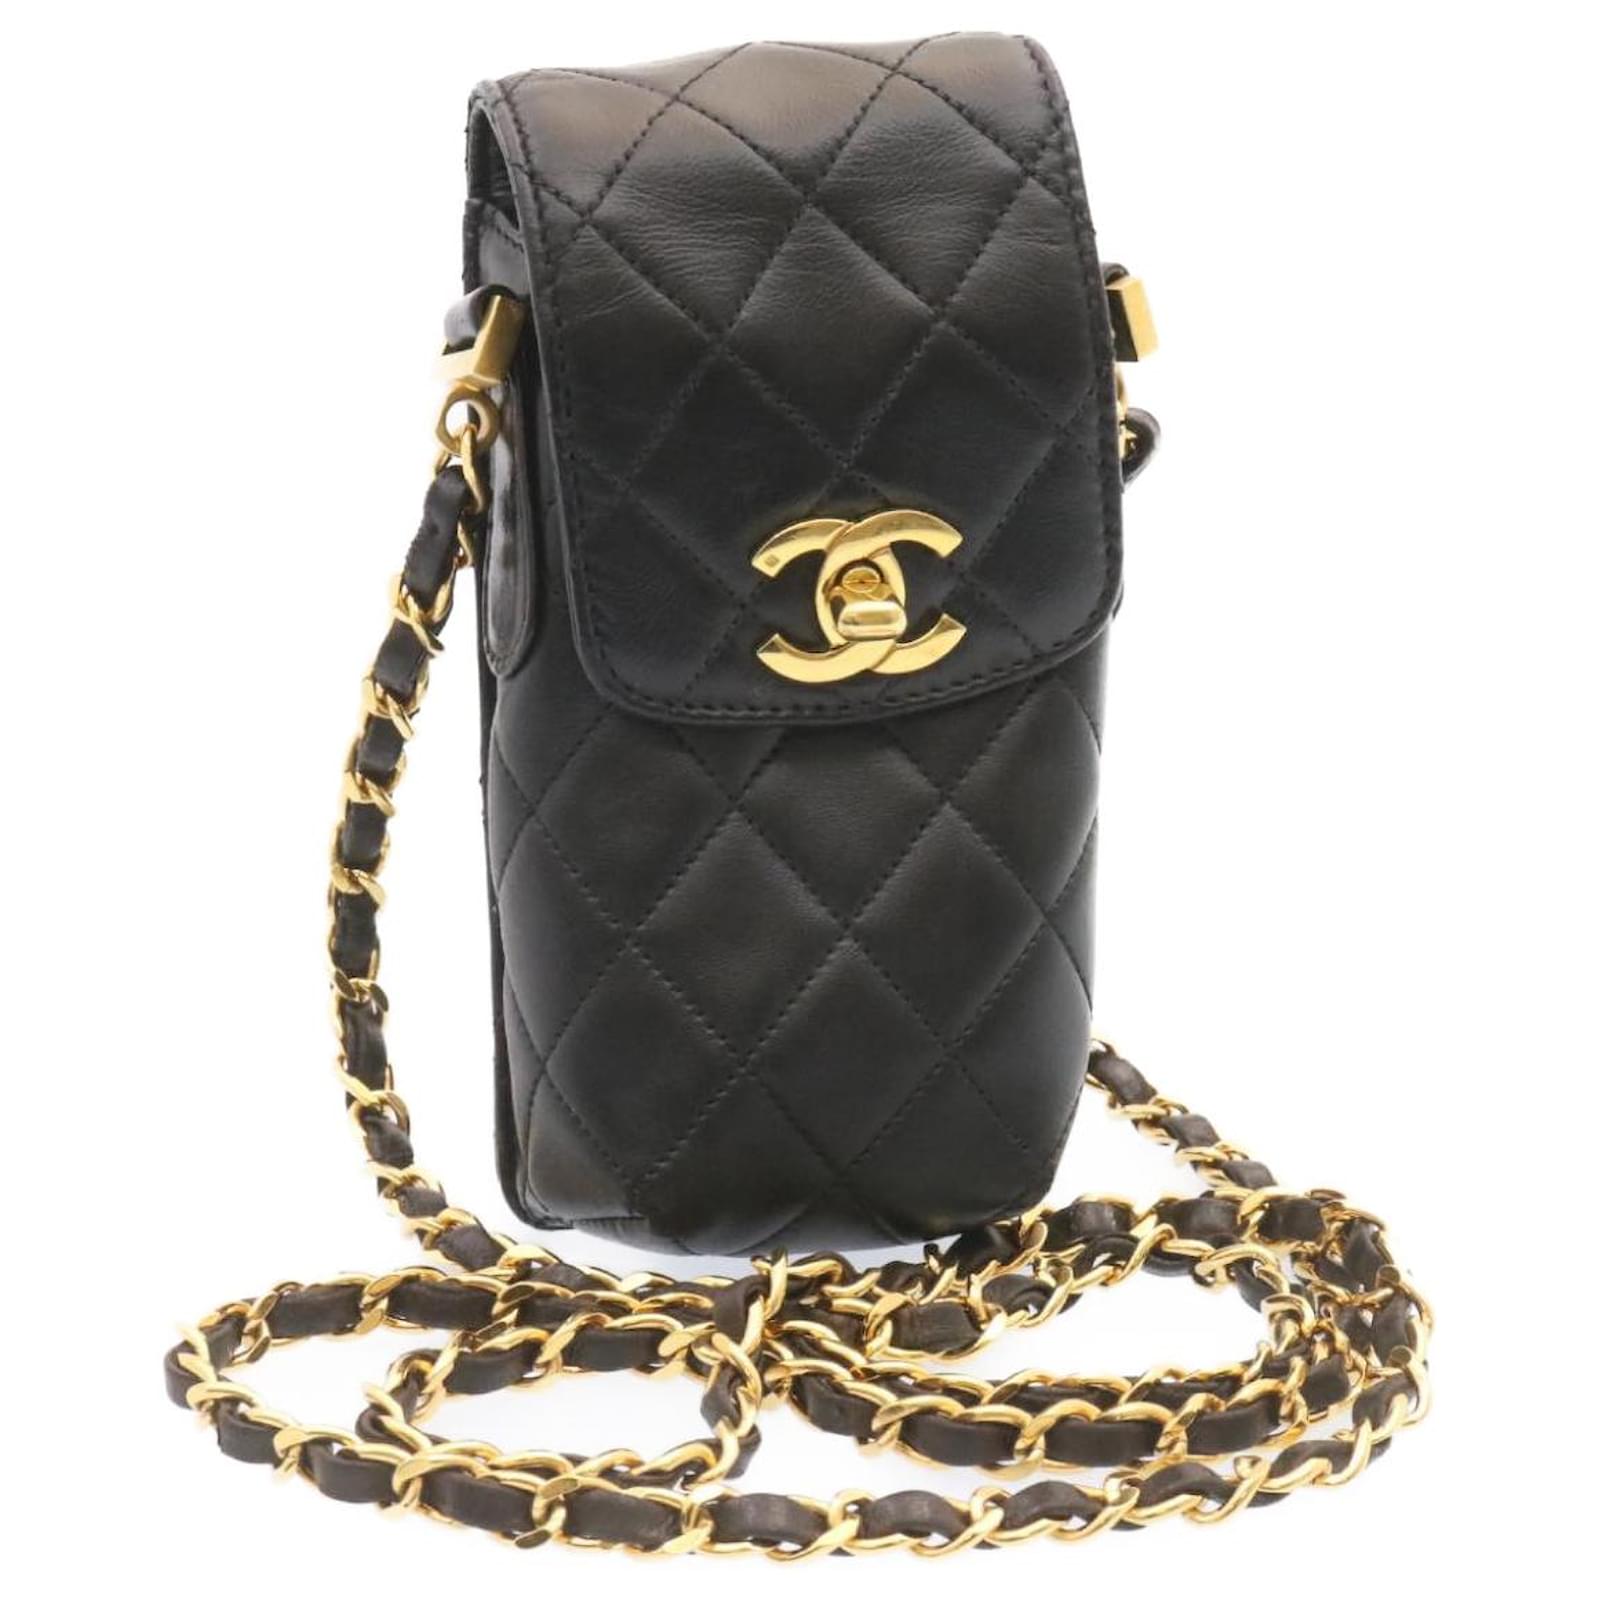 Chanel Chain Shoulder Bag Pouch